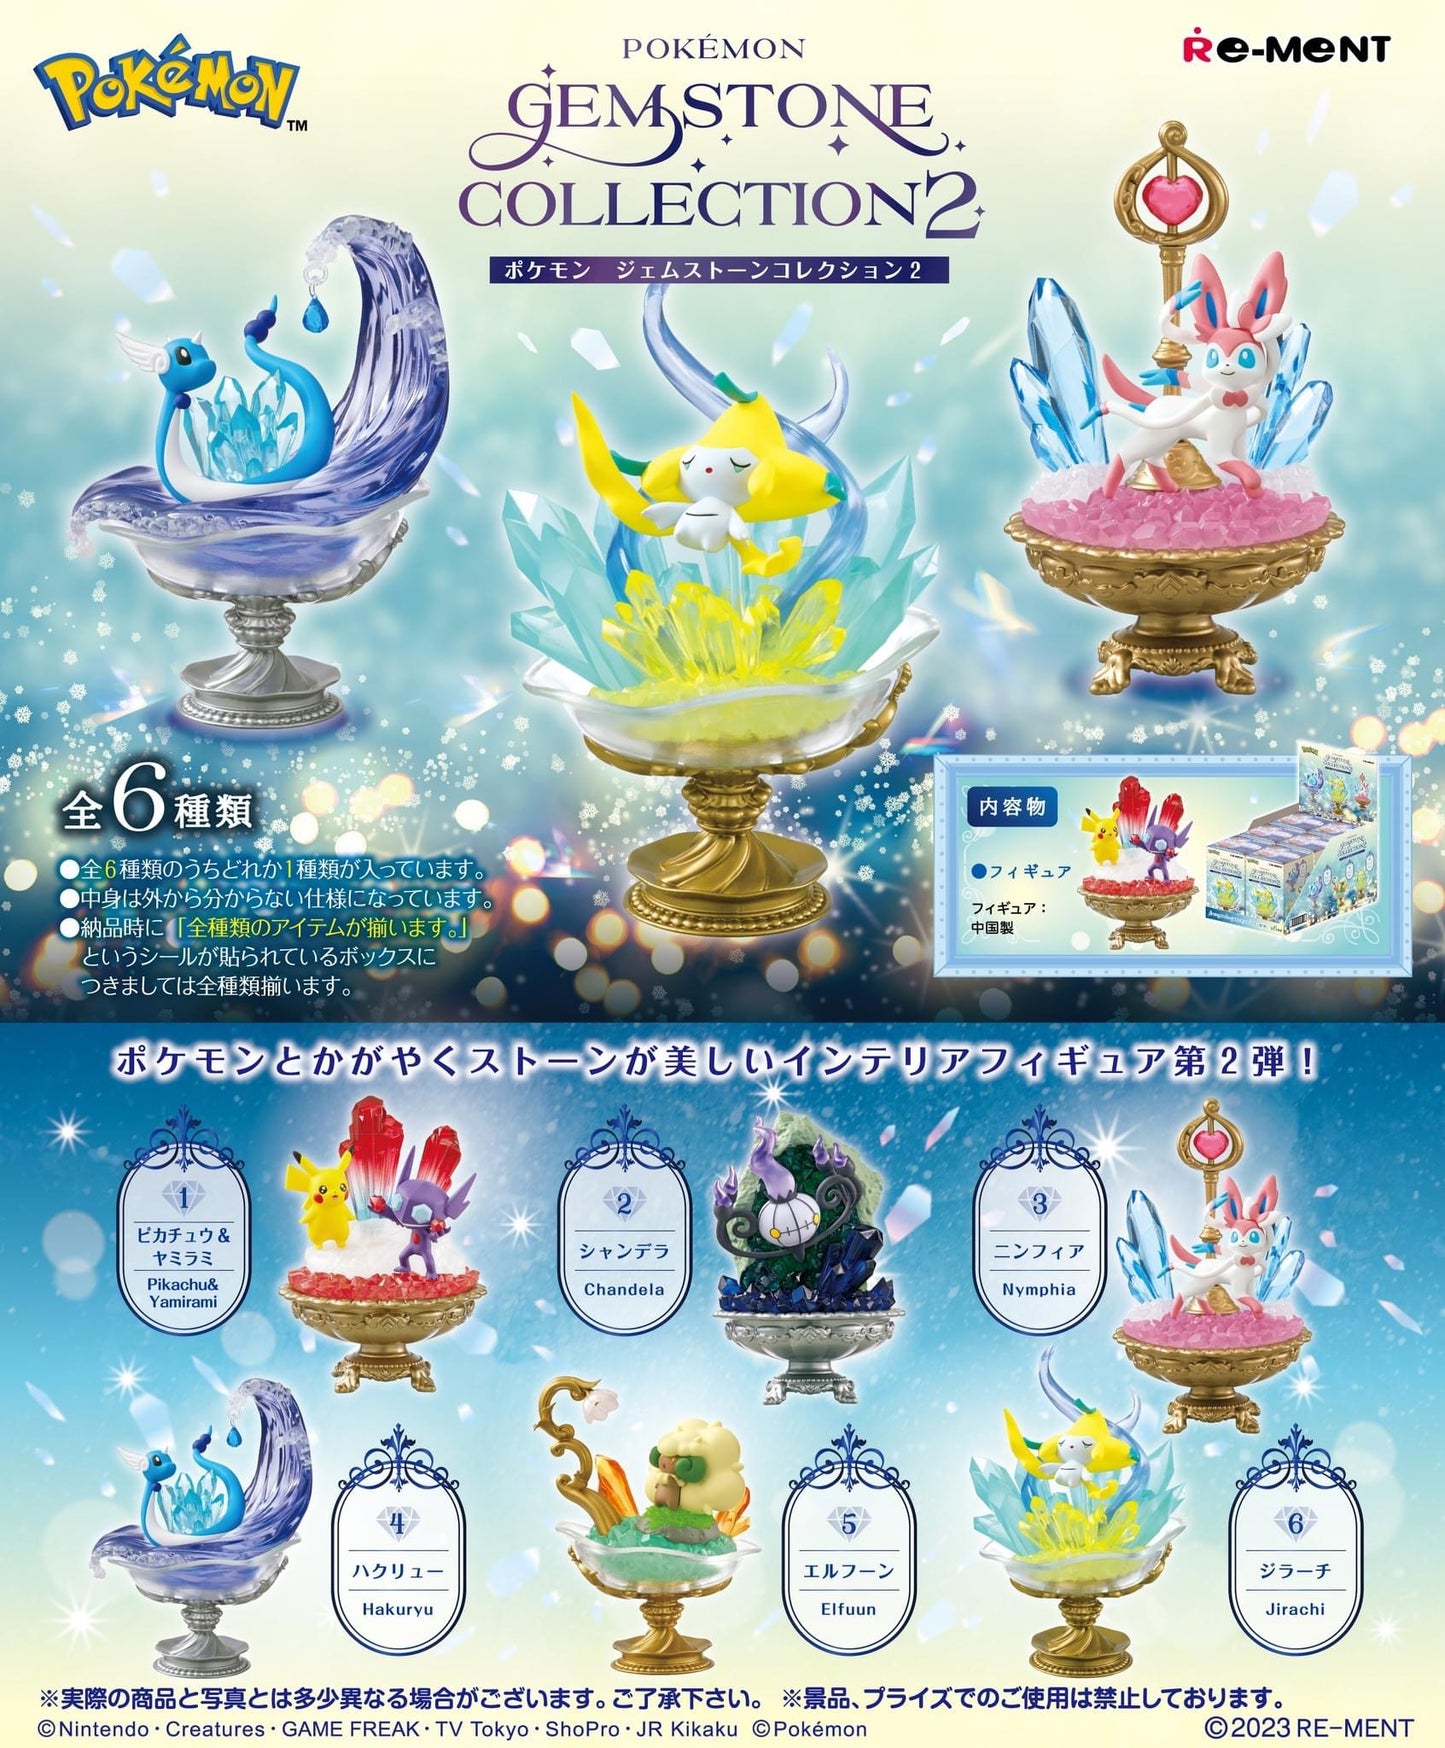 PREORDER - Pokemon Gemstone Collection 2 Rement Figures - November 2023